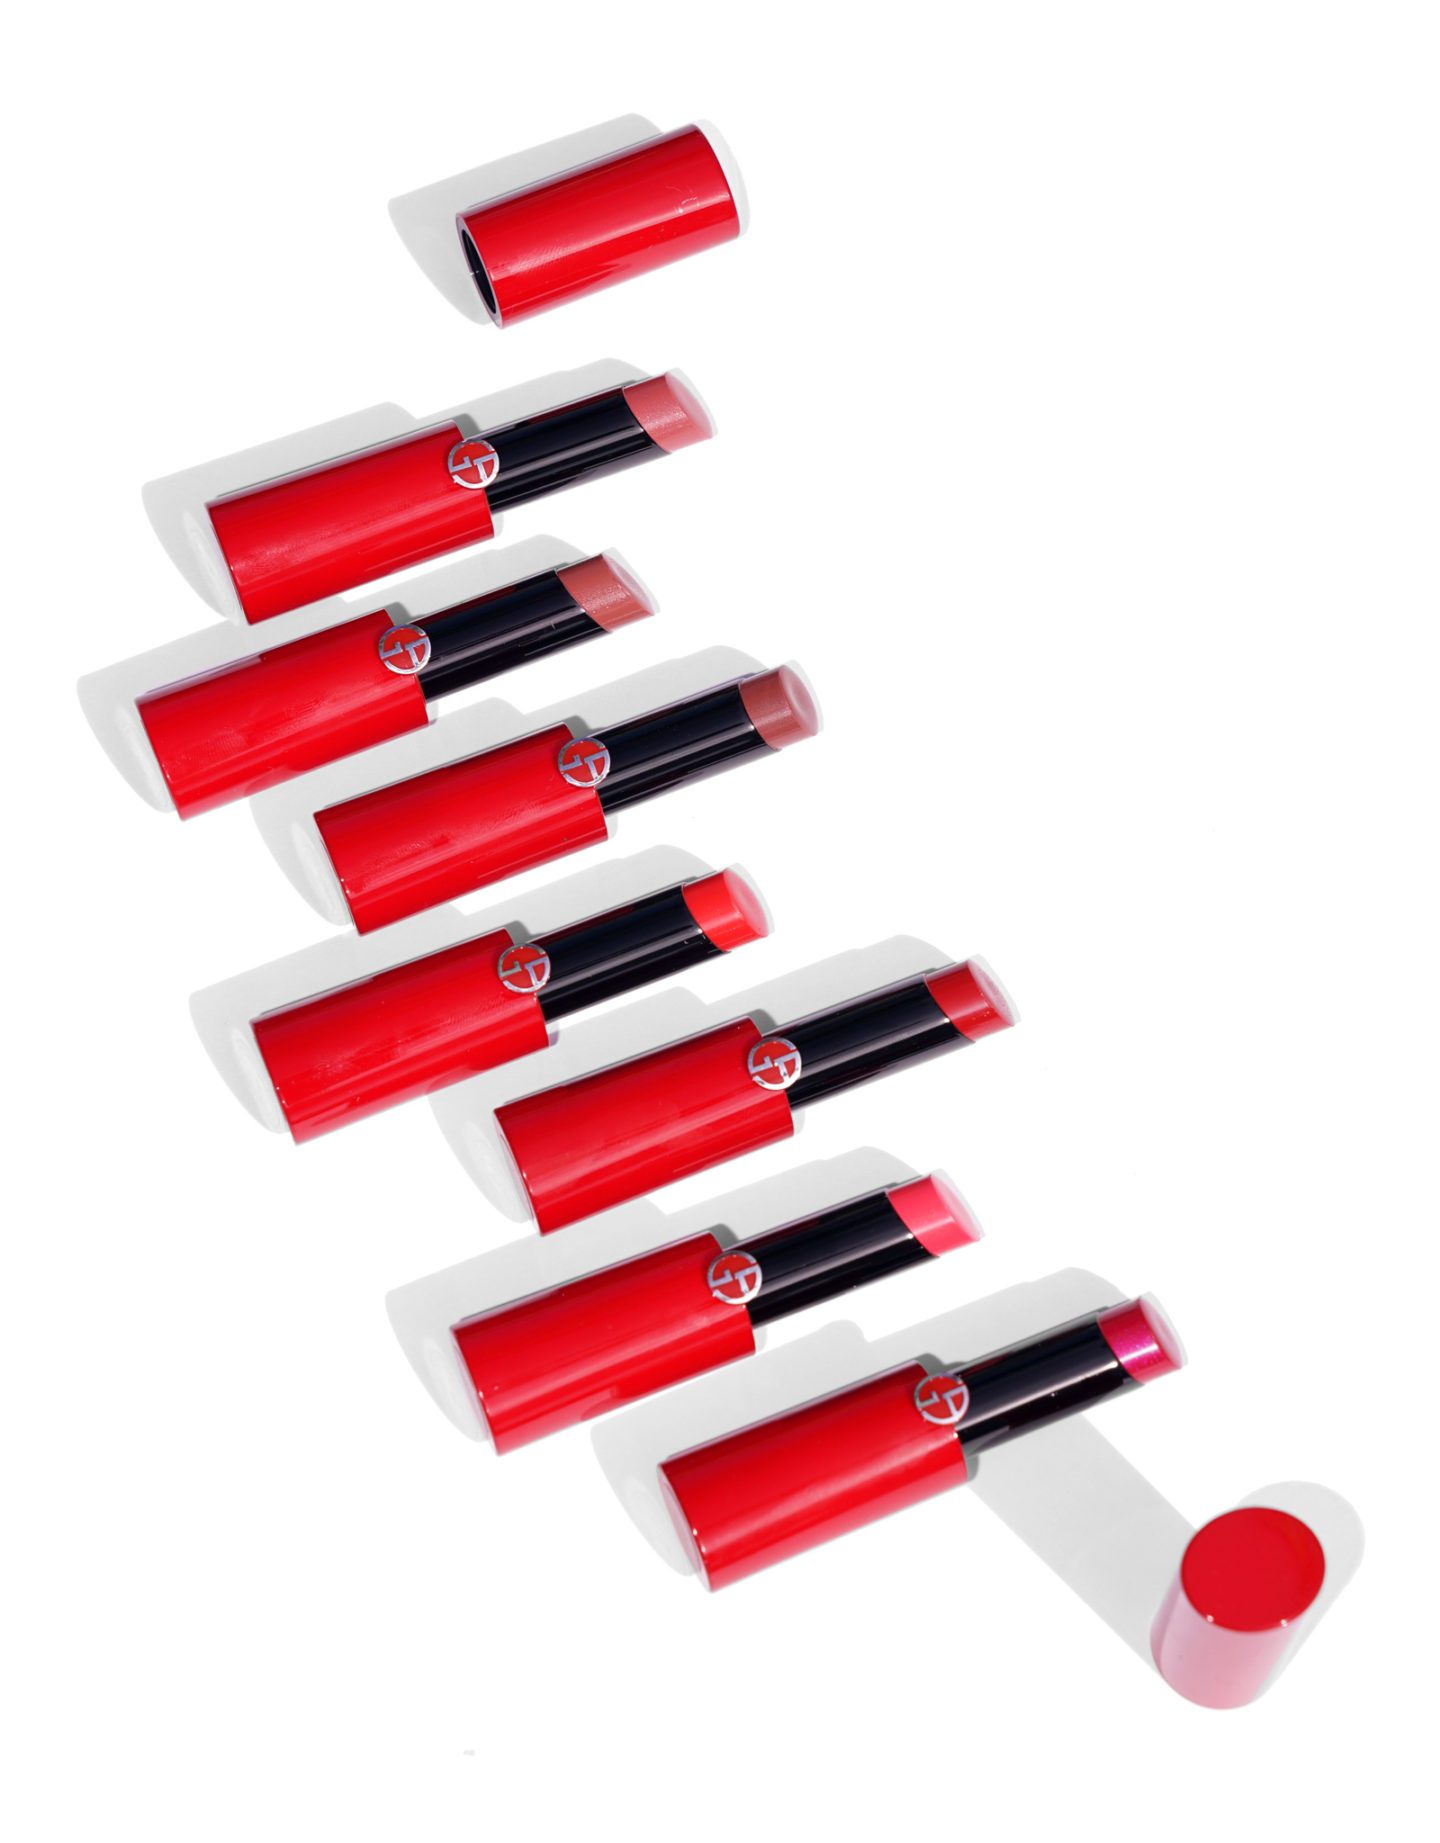 Armani Ecstasy Shine lipstick review